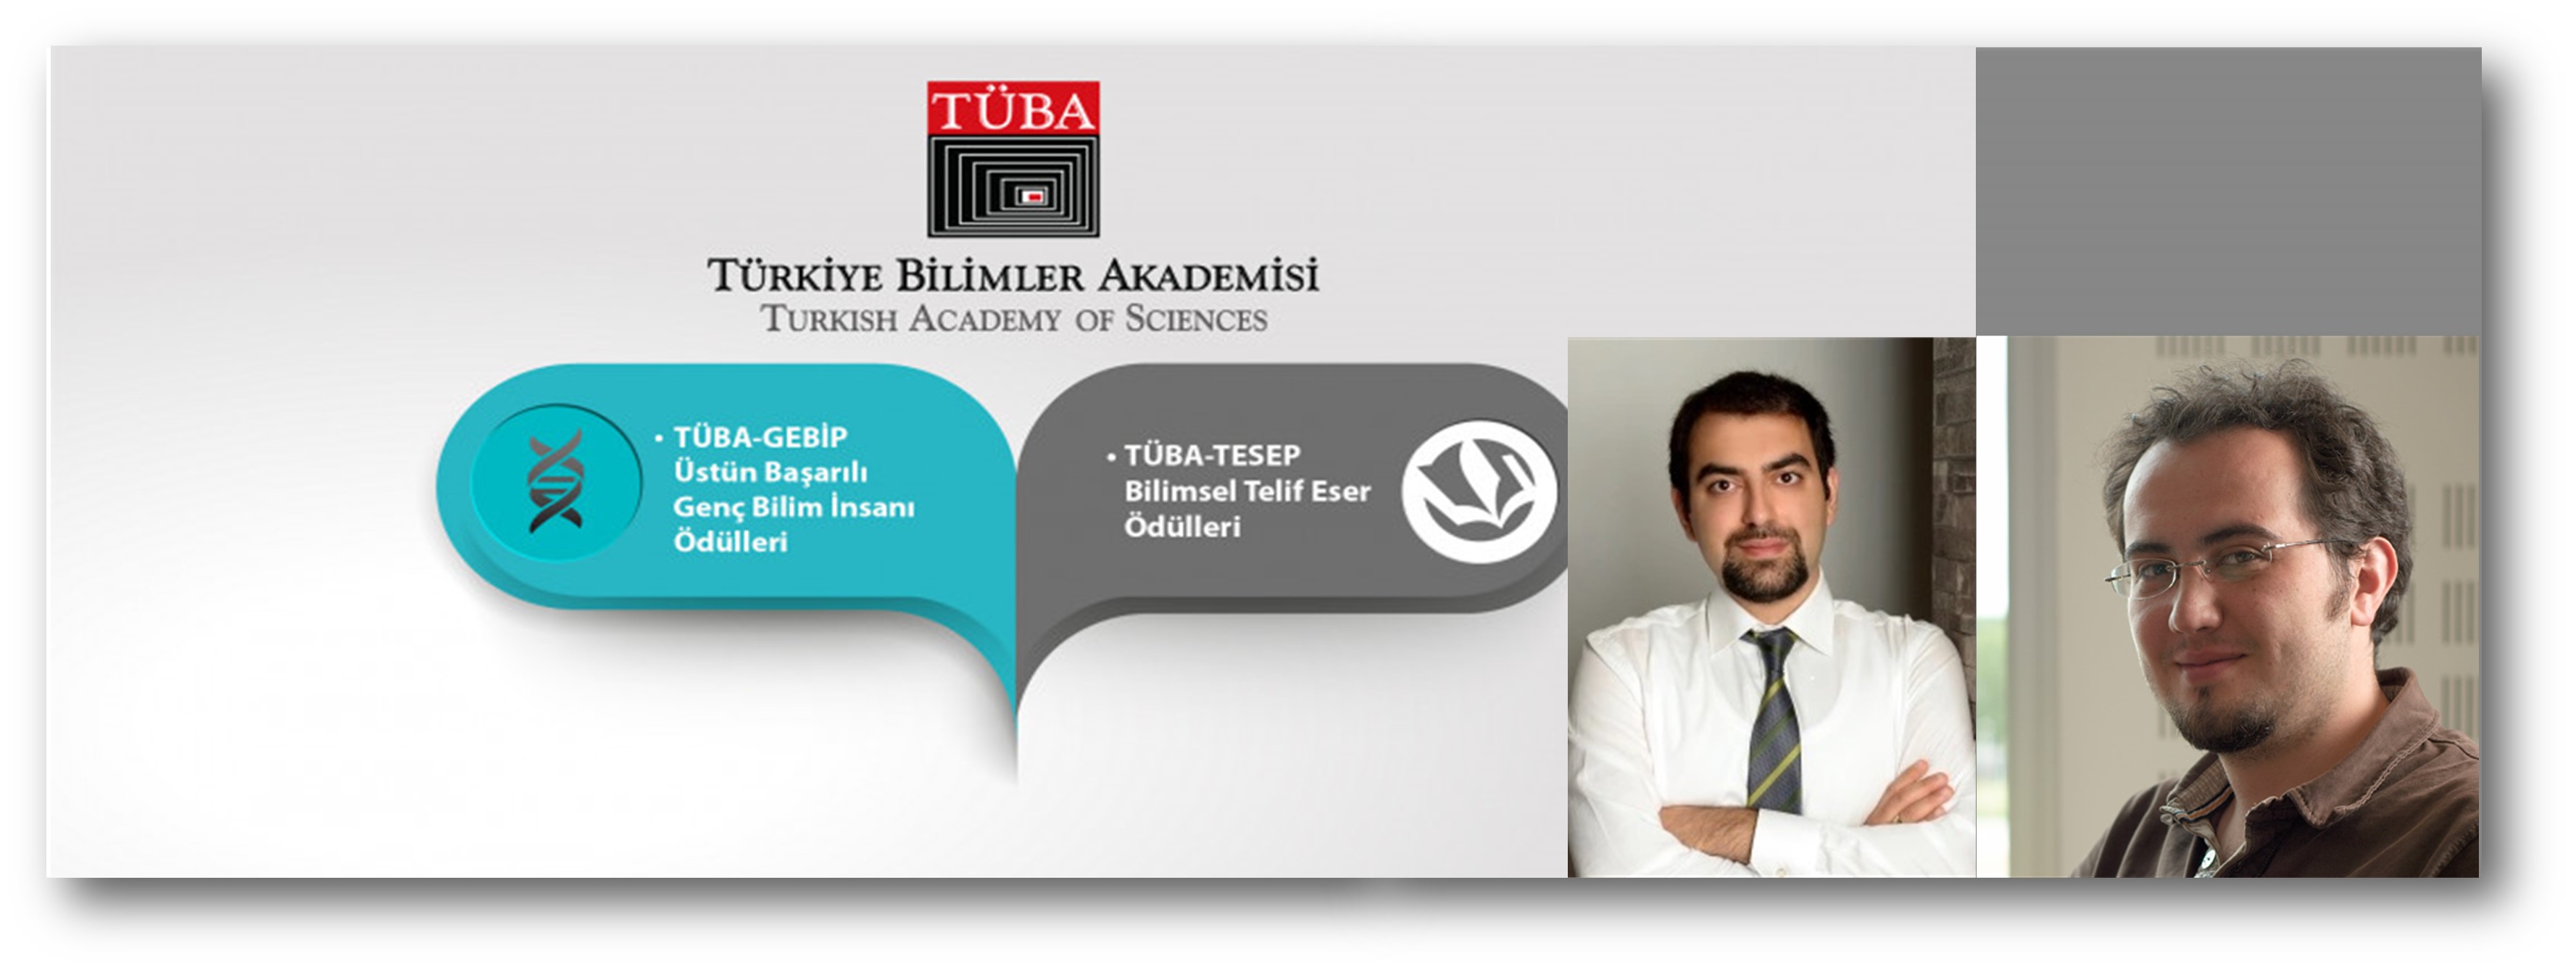 Bilkent Faculty Members Receive TÜBA-GEBİP Awards